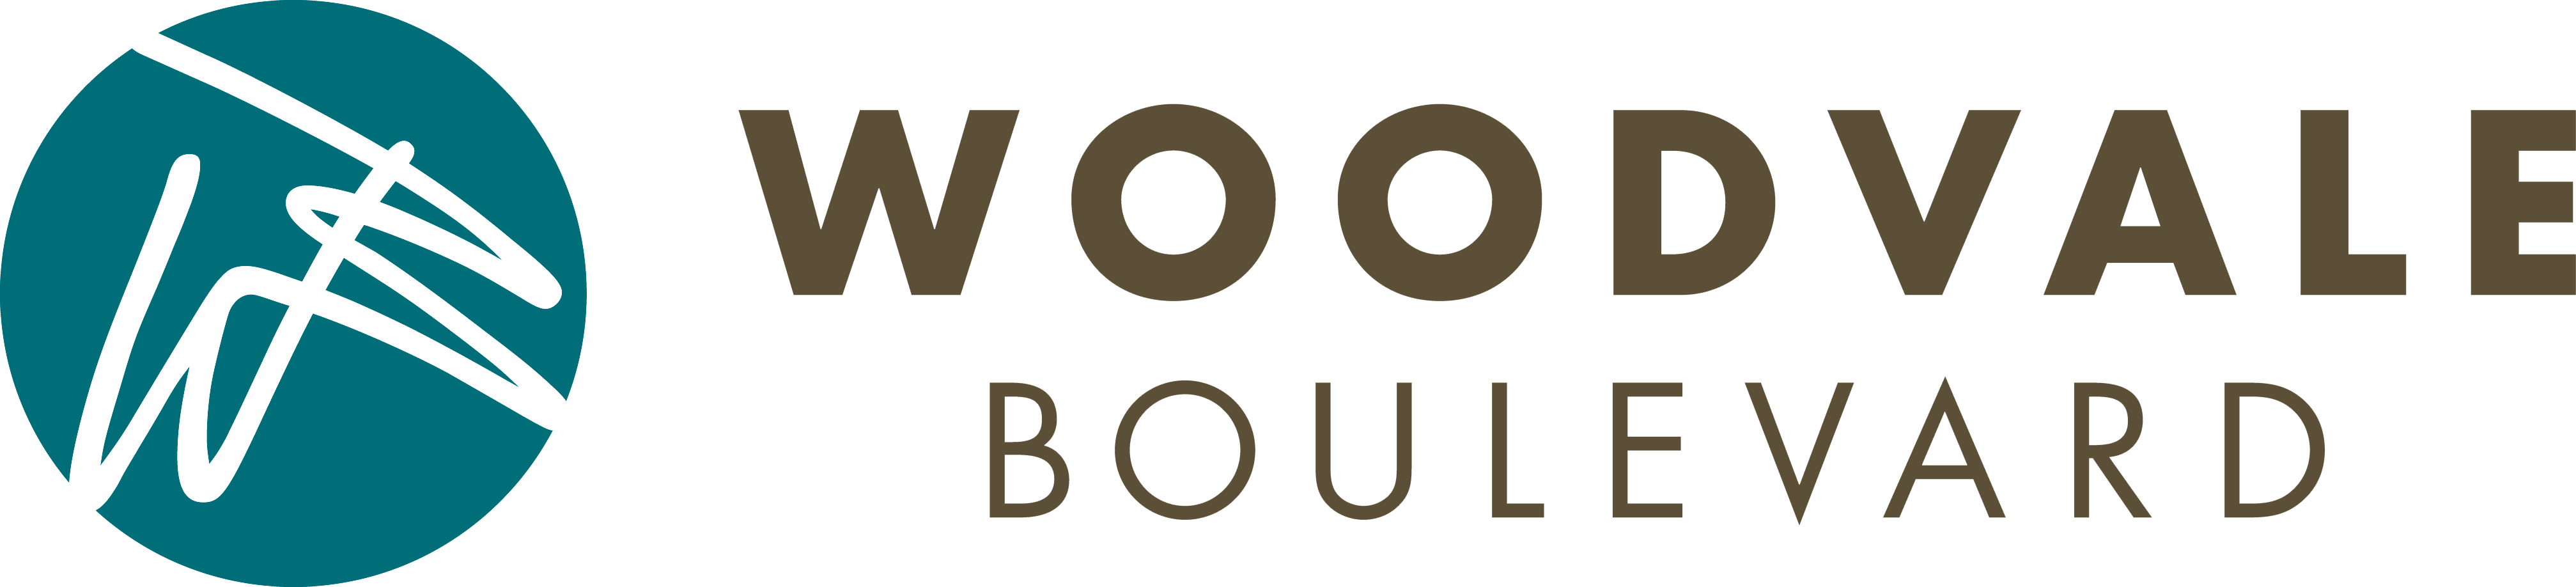 Woodvale Boulevard Shopping Centre logo